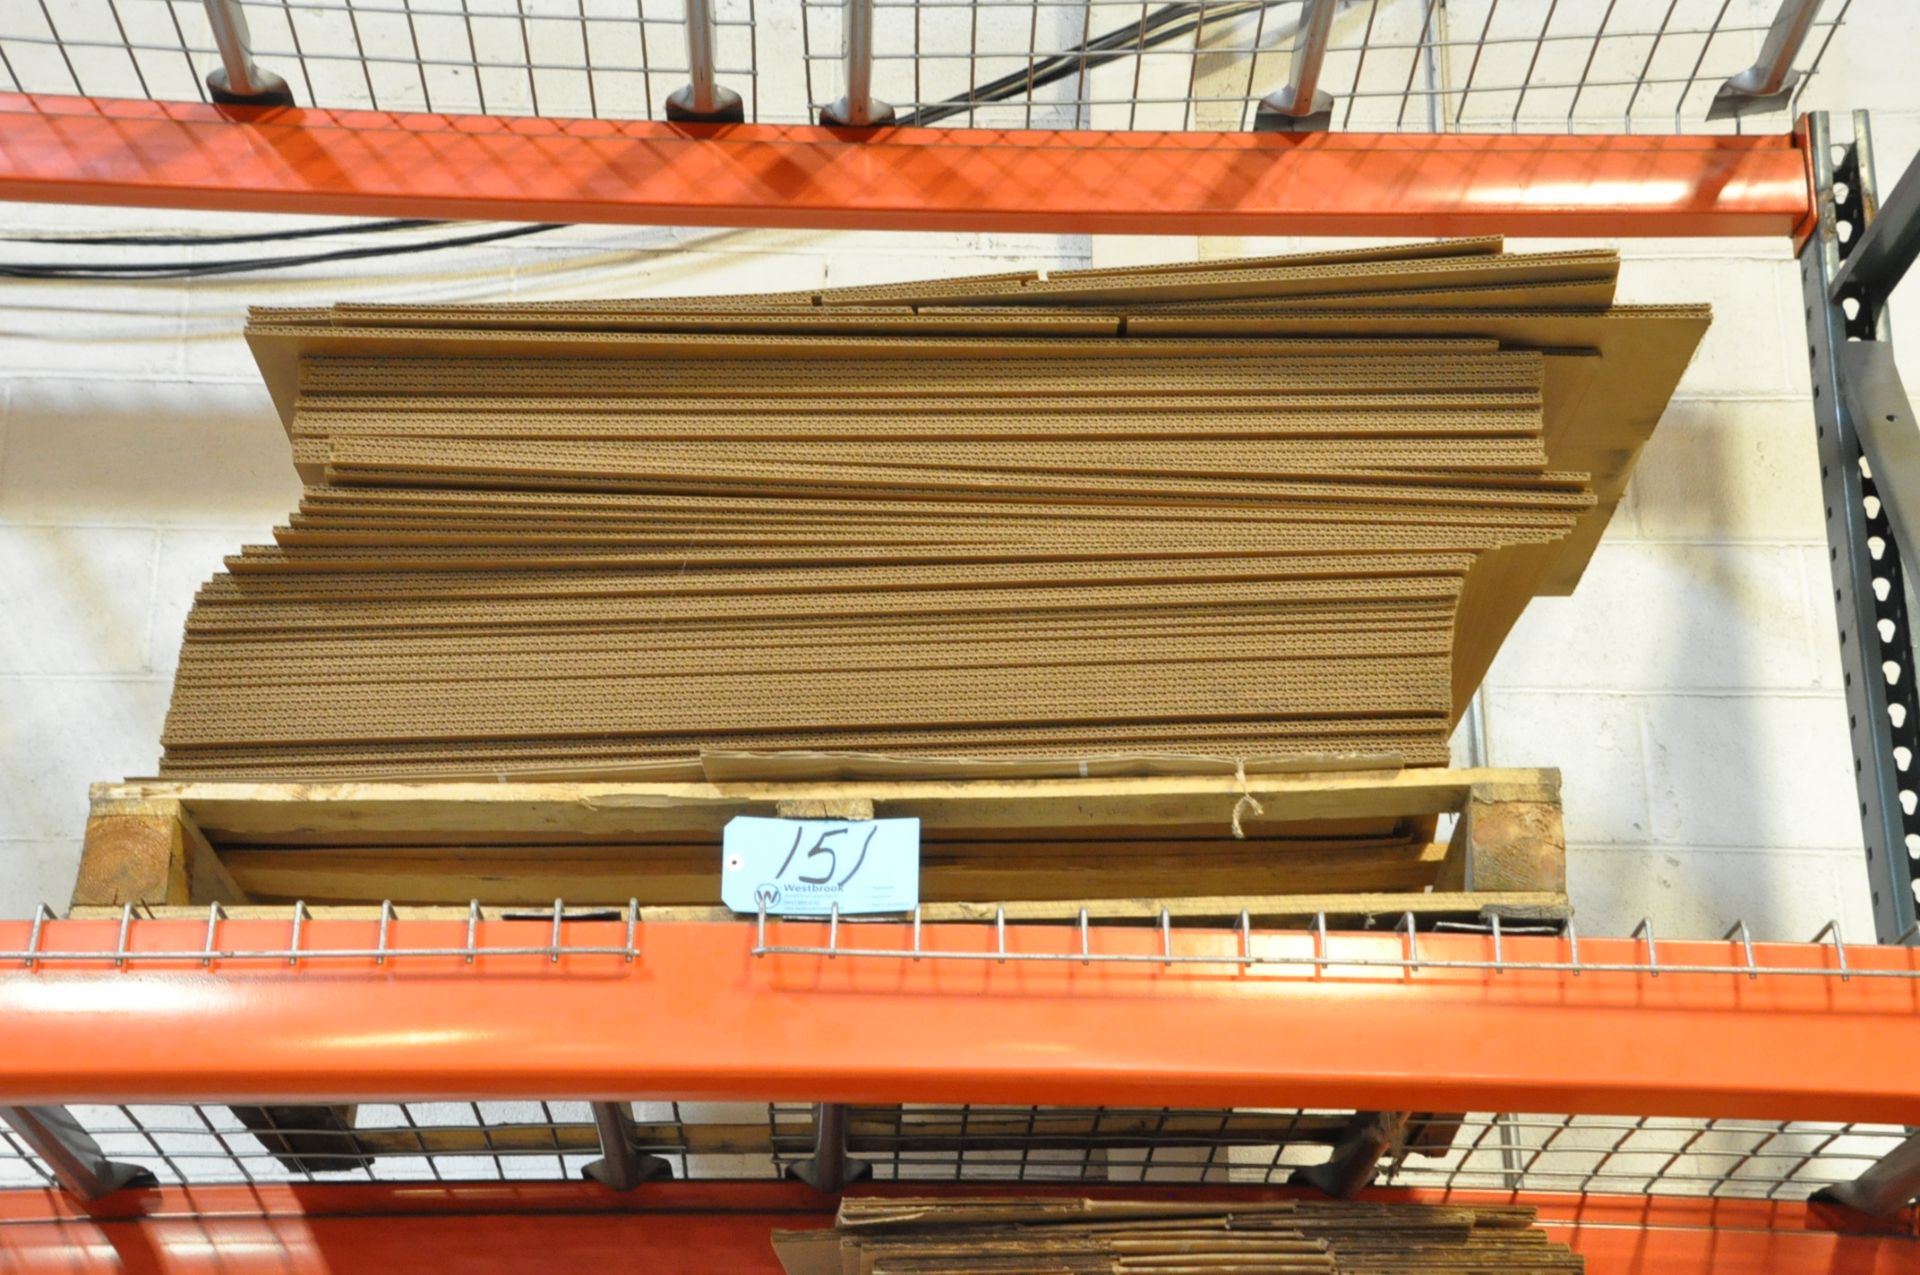 Lot-Cardboard Boxes on (1) Pallet on (1) Shelf